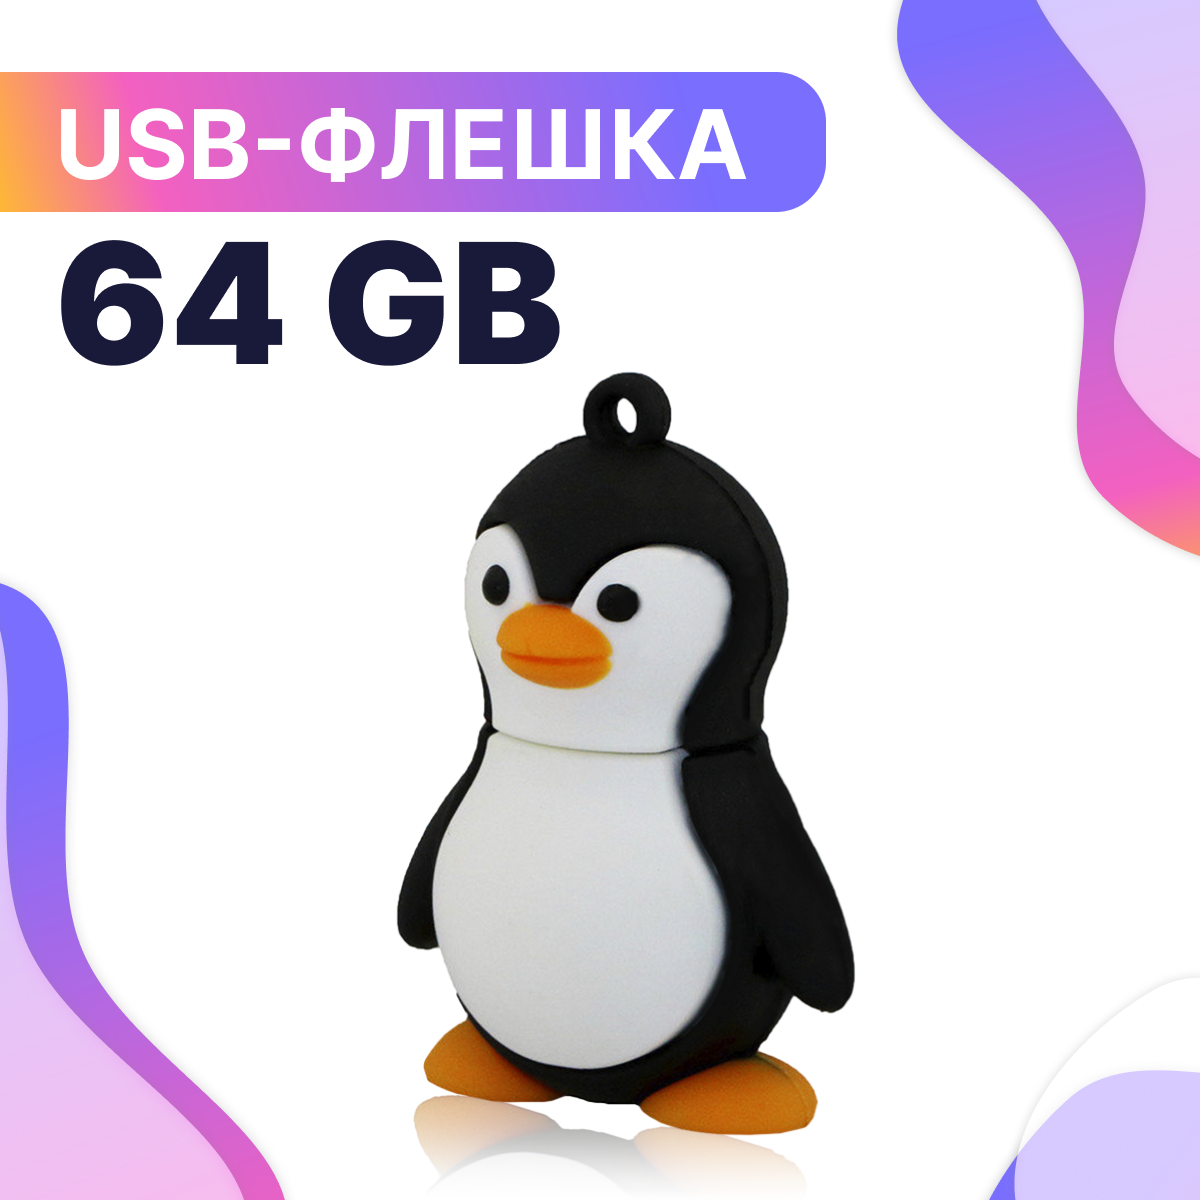 Флешка USB 64GB / Оригинальная подарочная флешка ЮСБ 64 ГБ / Флеш накопитель / USB Flash Drive (Пингвин)